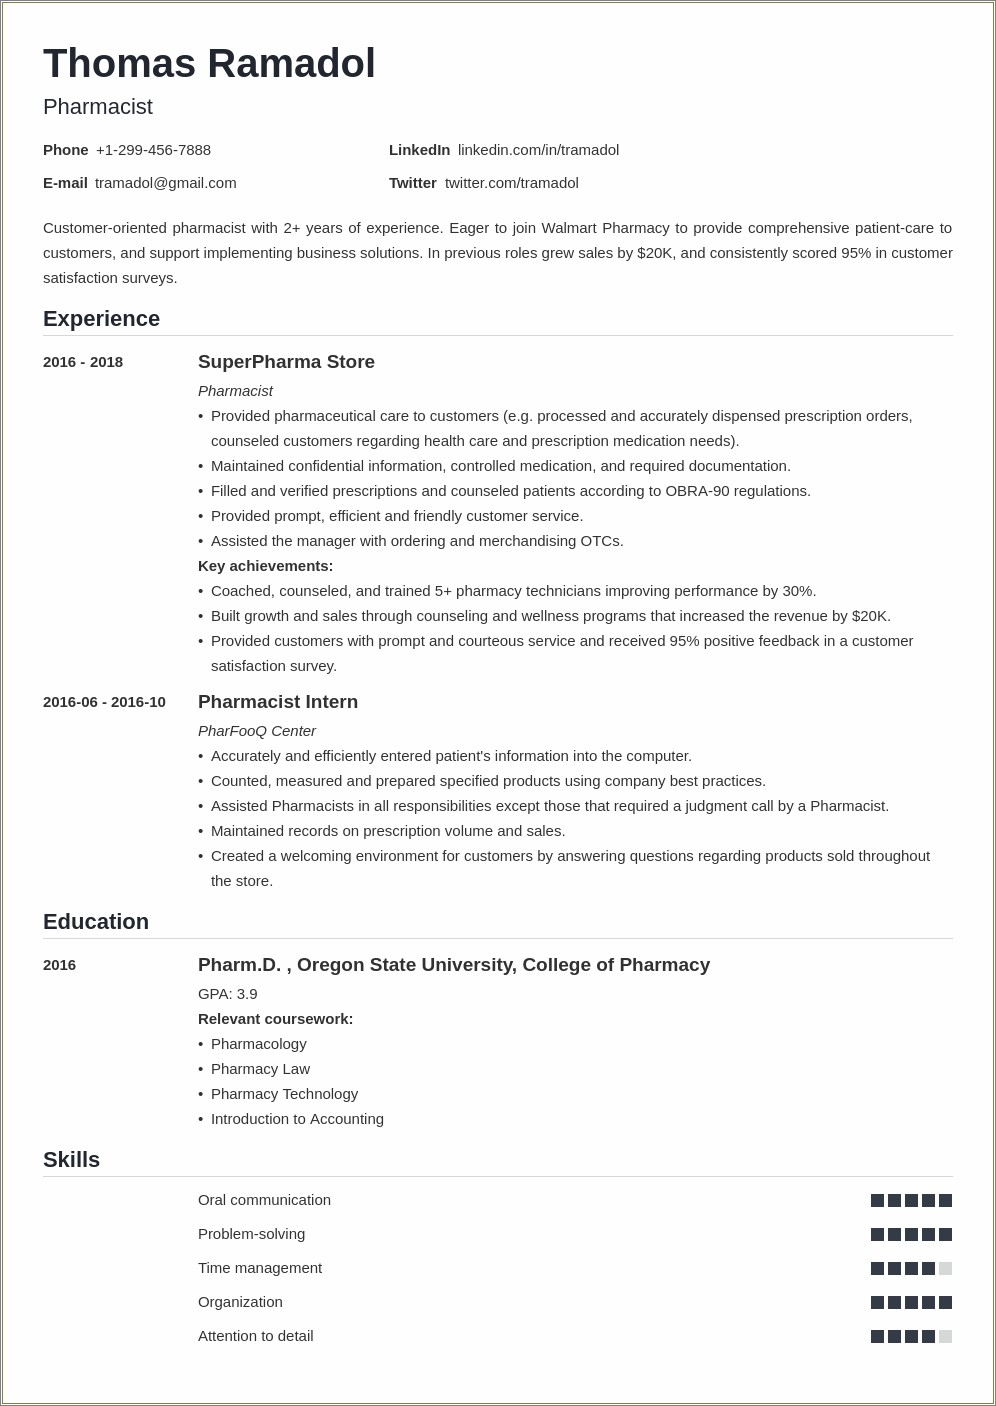 Sample Resume For Pharmacist In India